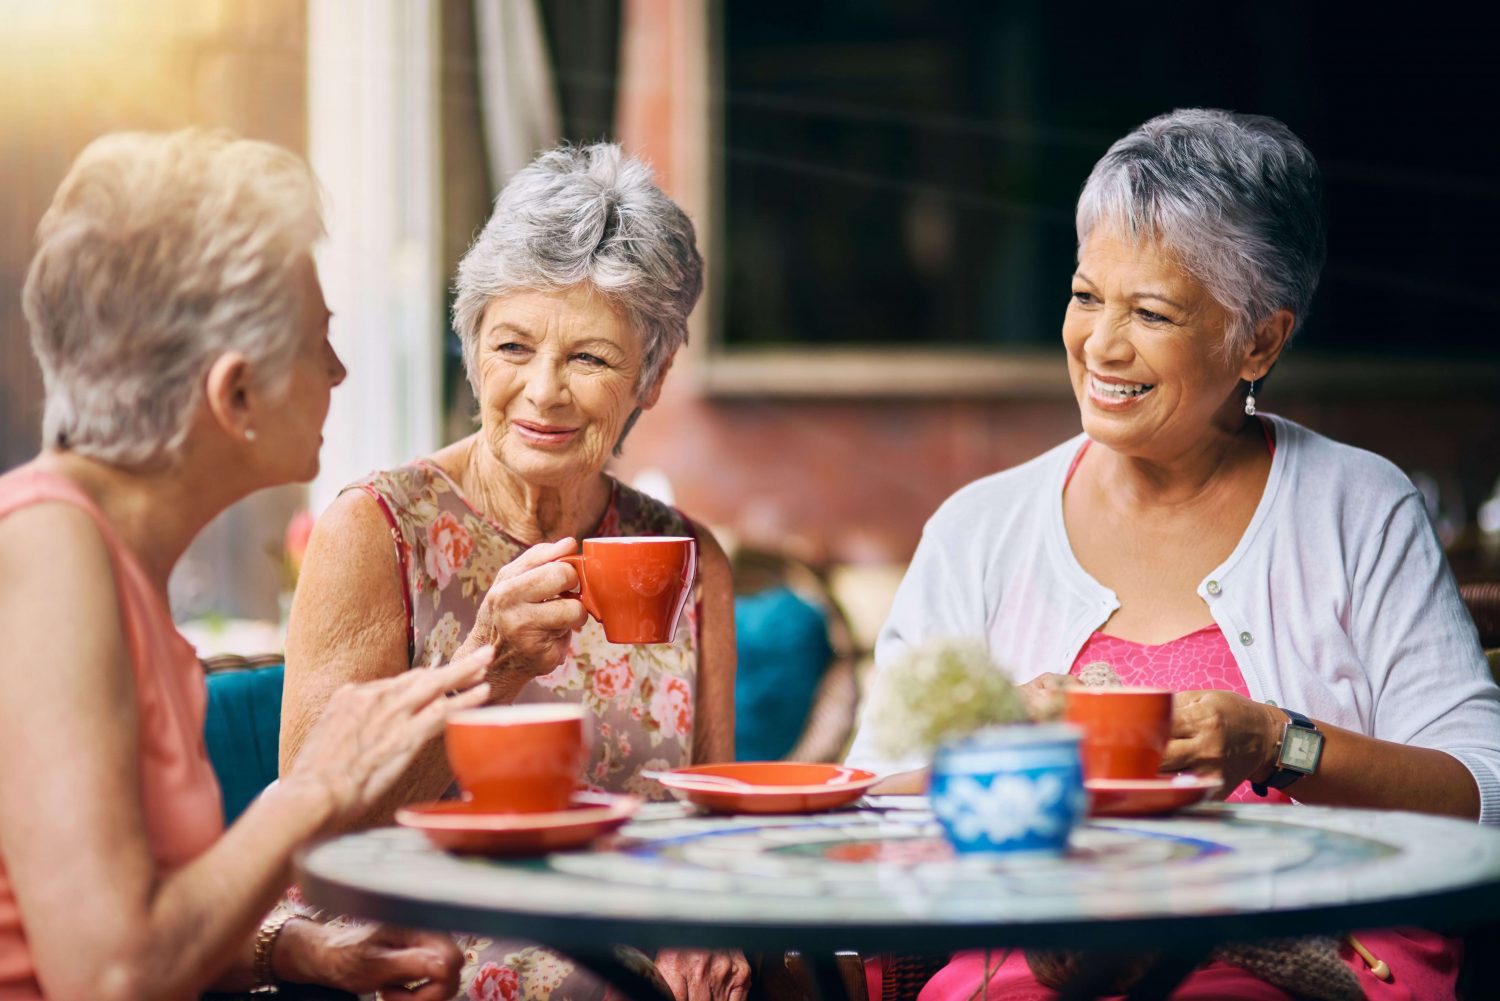 A group of women enjoy coffee ouside